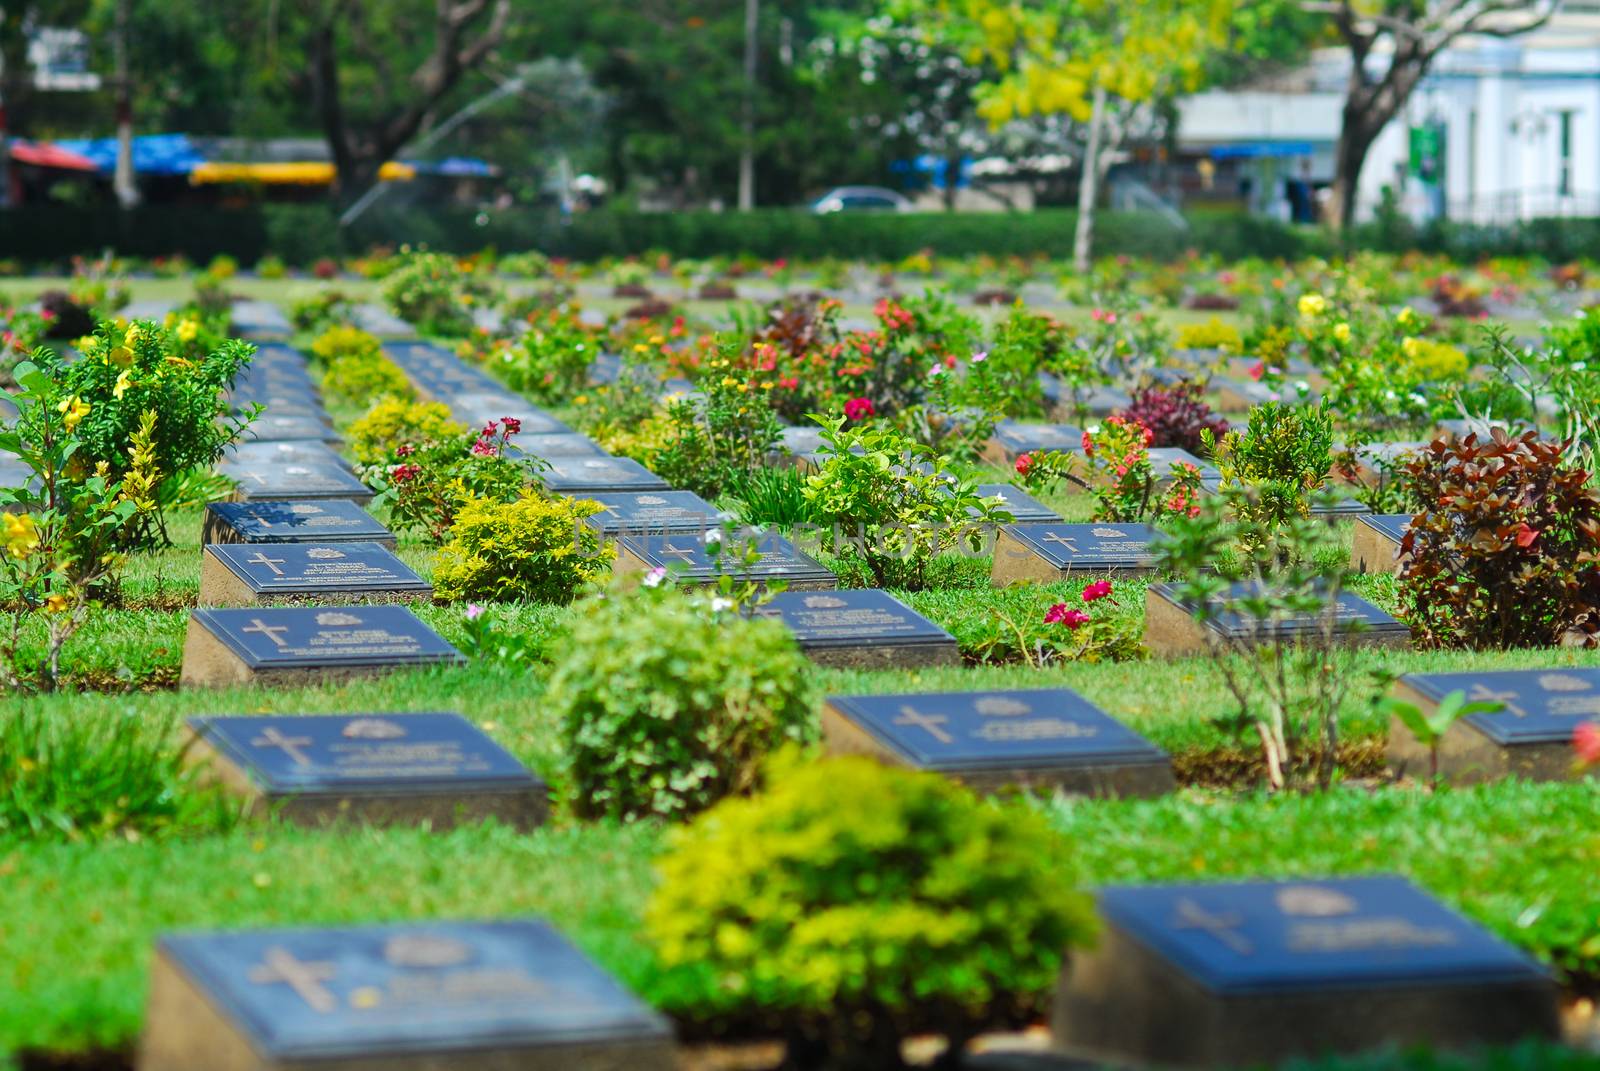 cemetery graveyard of die military world war two in kanchanaburi by yotananchankheaw